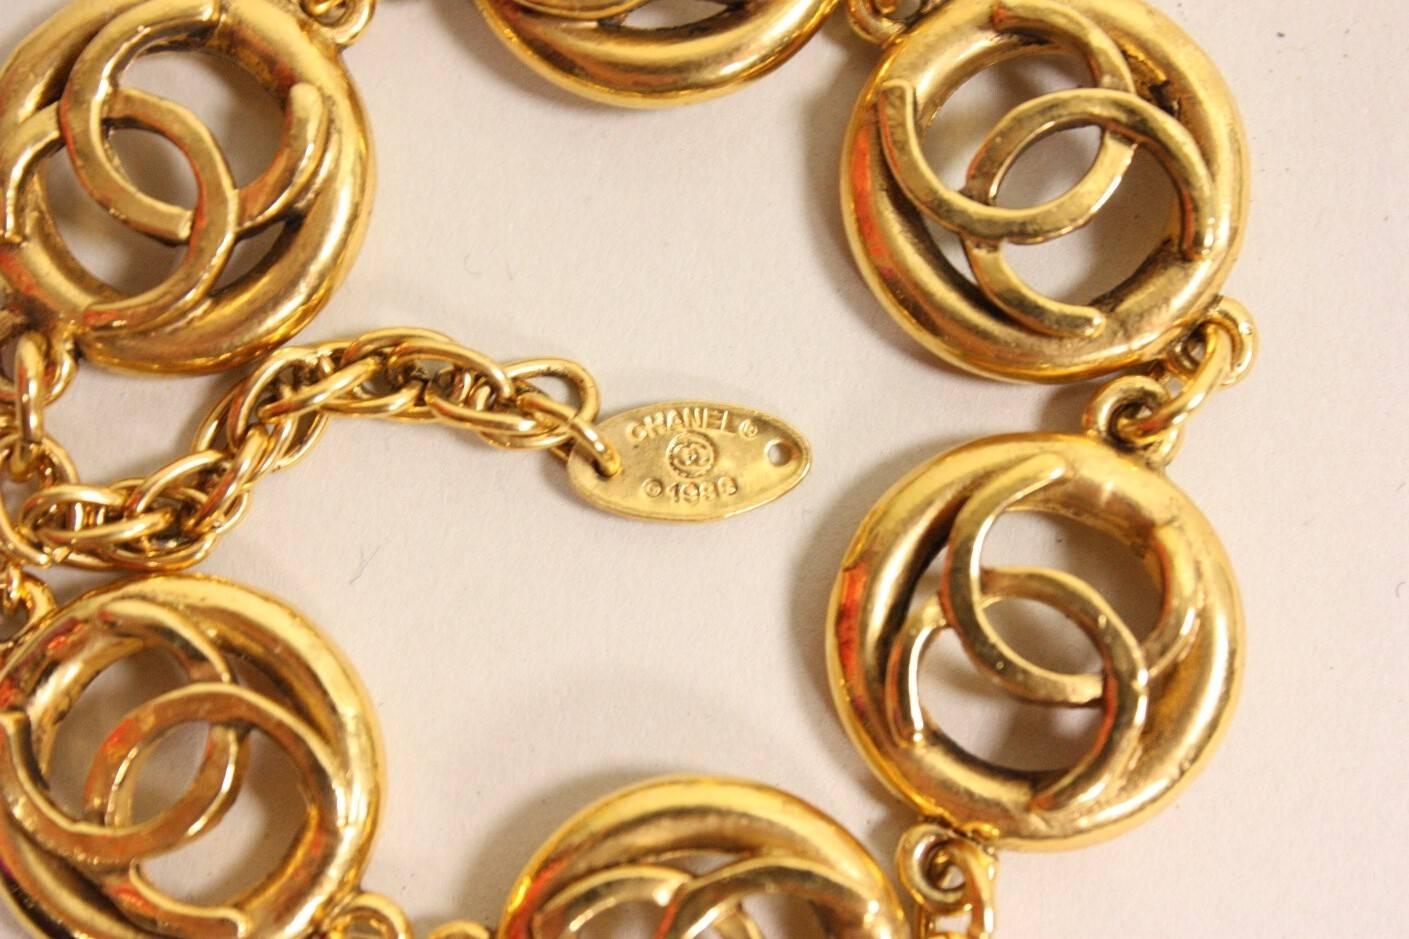 Women's 1980's Chanel Gold-Toned Bracelet